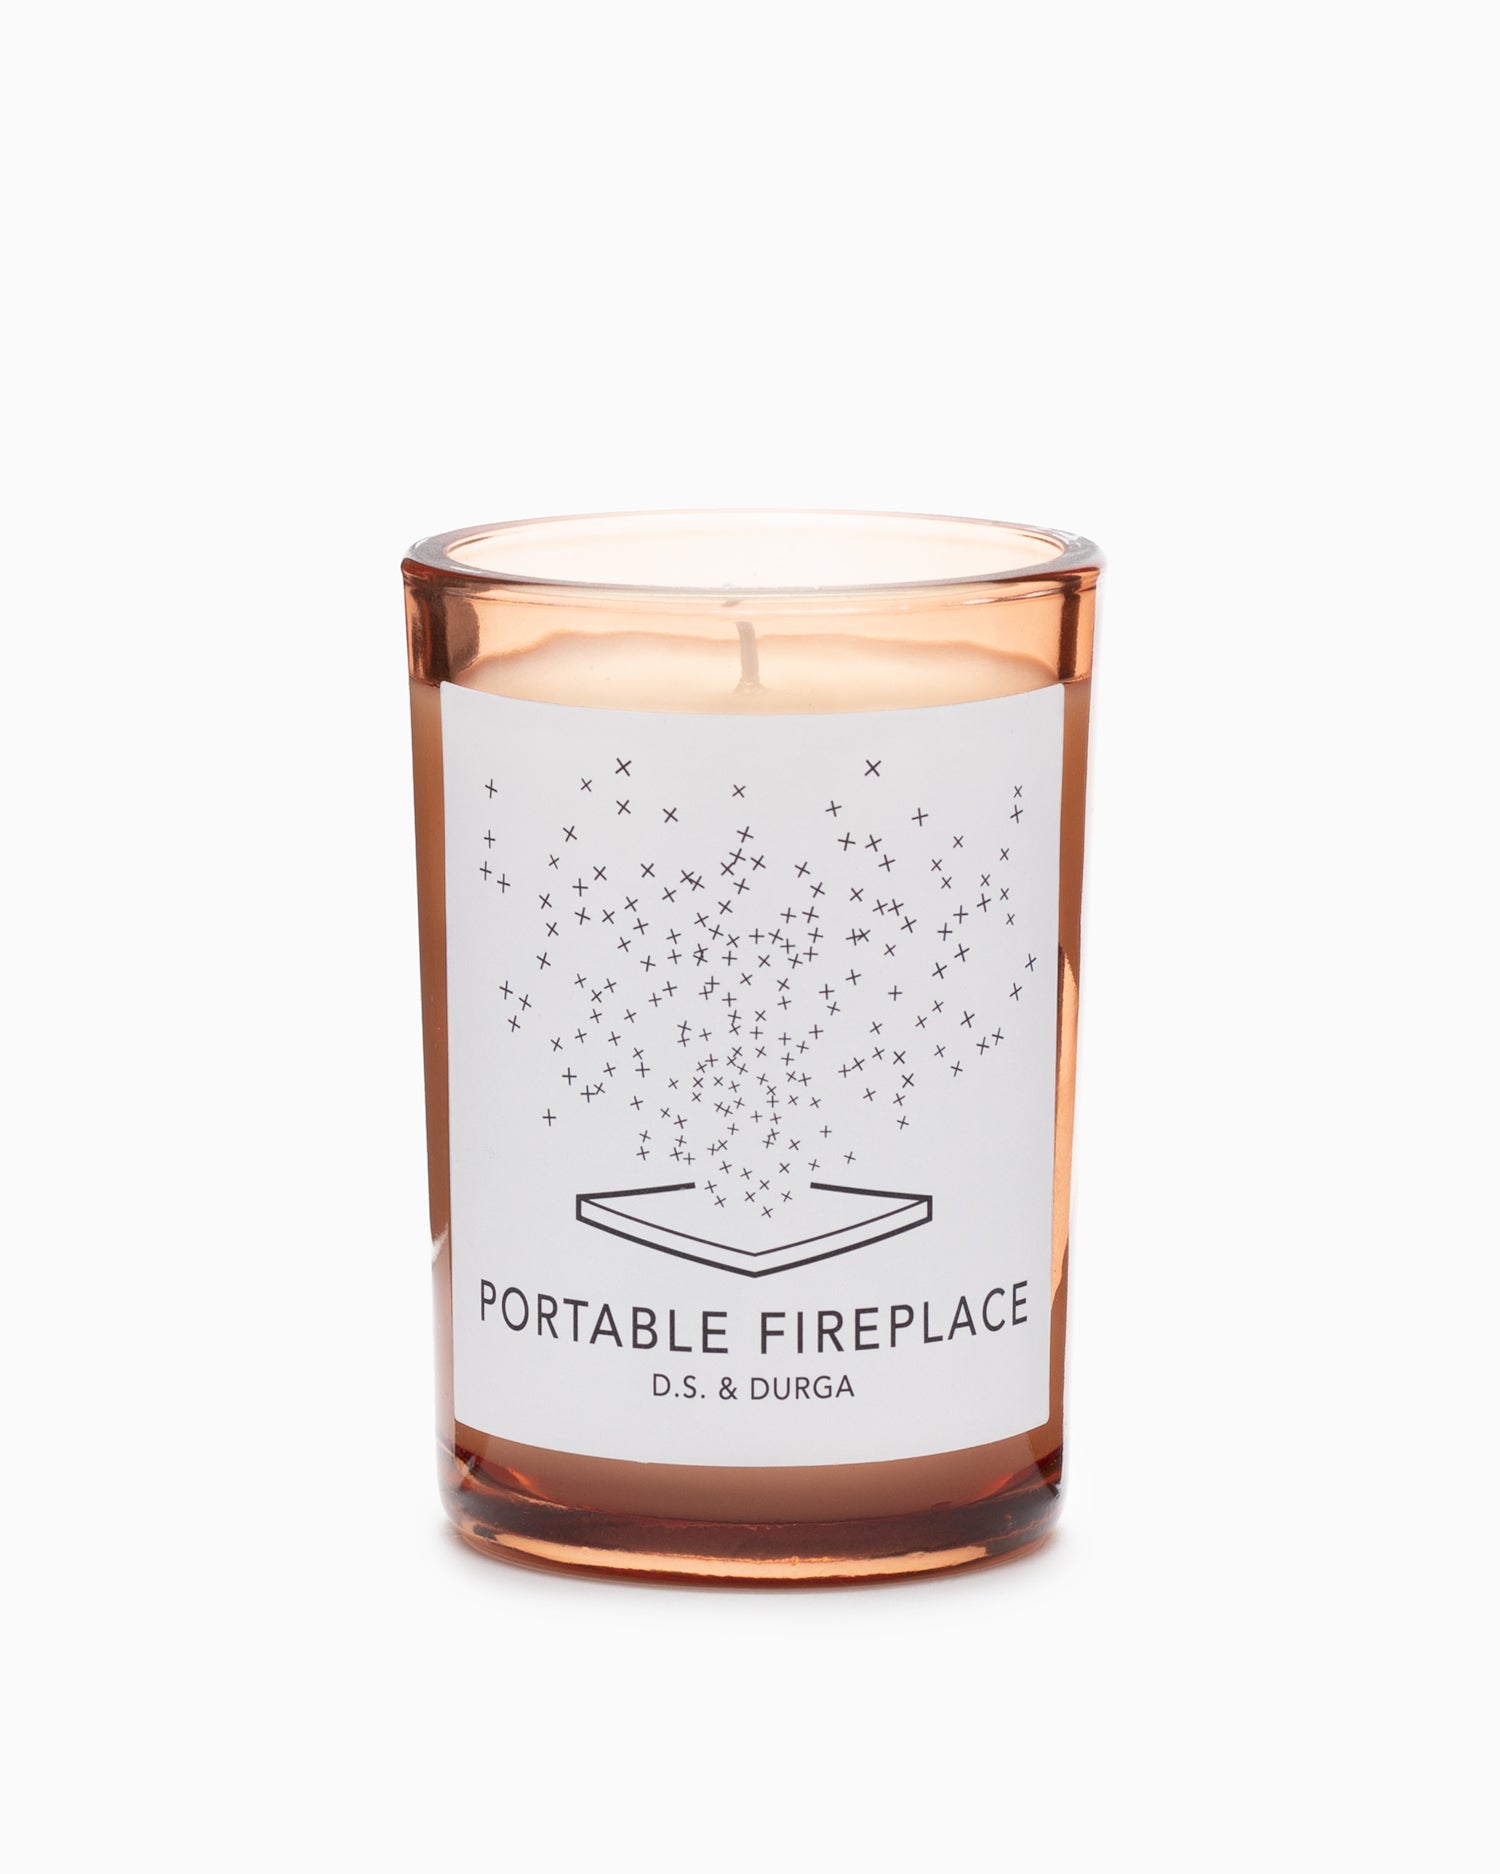 Portable Fireplace Candle - D.S. & Durga